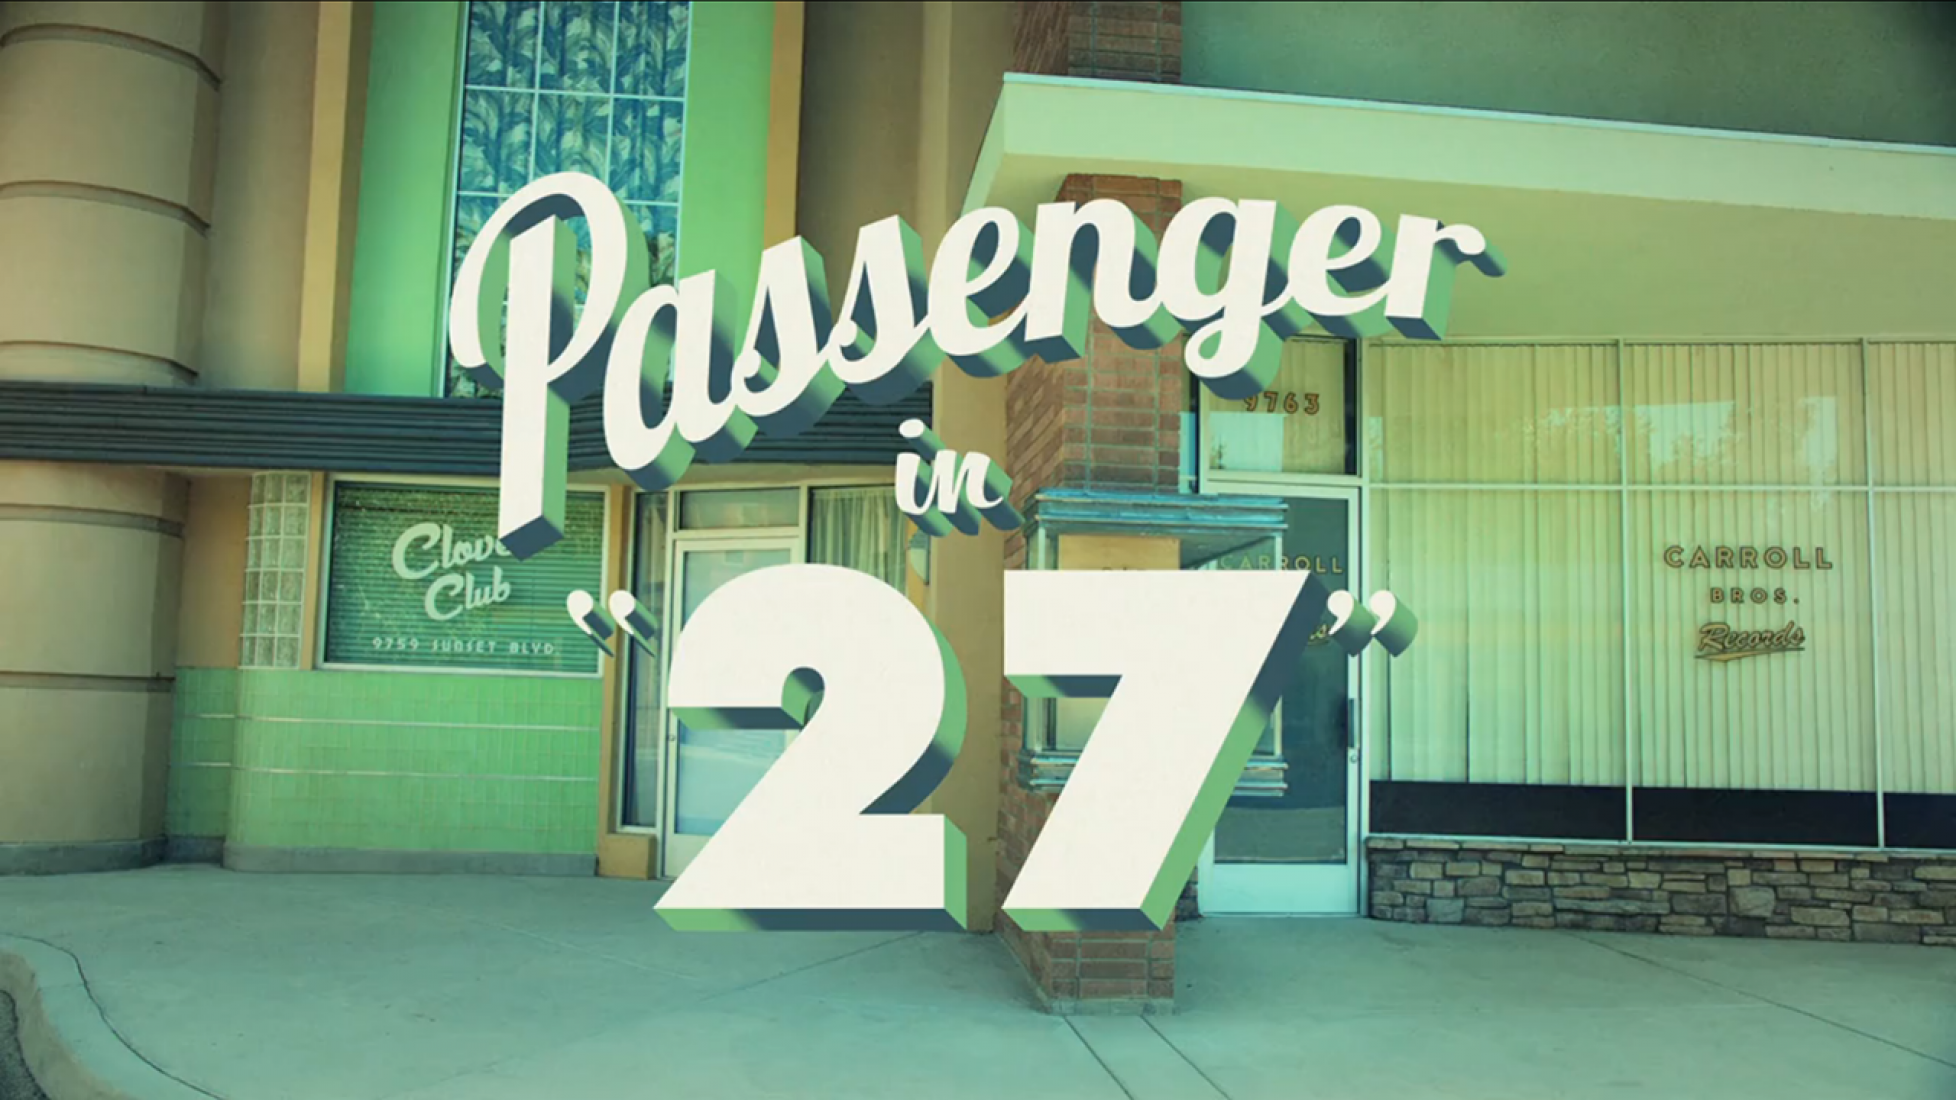 Passenger '27' by James Lees